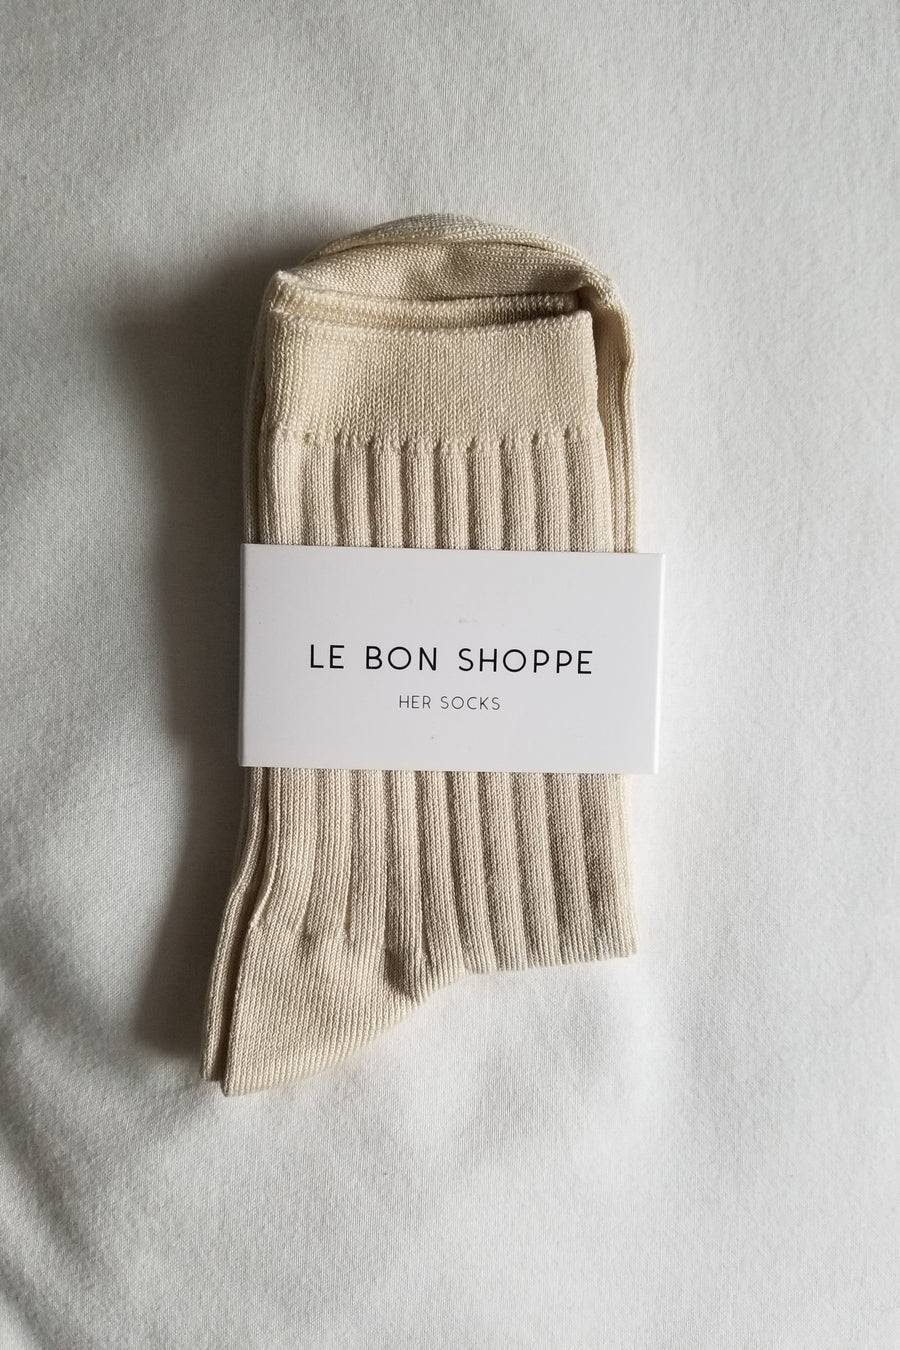 Le Bon Shoppe 'Her Socks'  - Porcelain